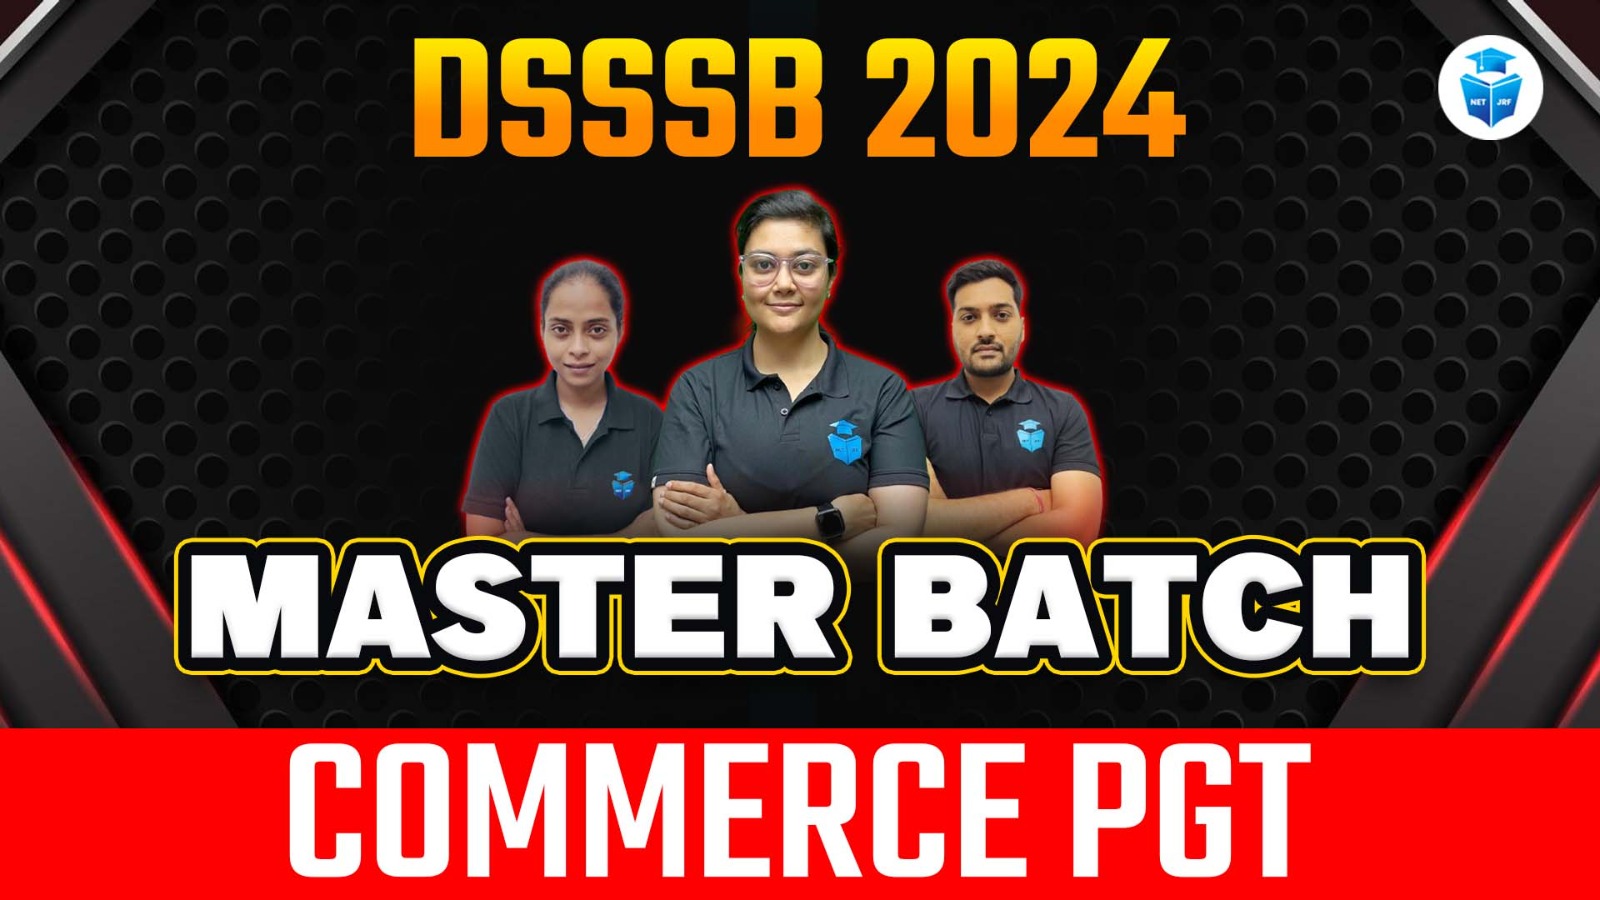 MASTER BATCH (Commerce PGT)